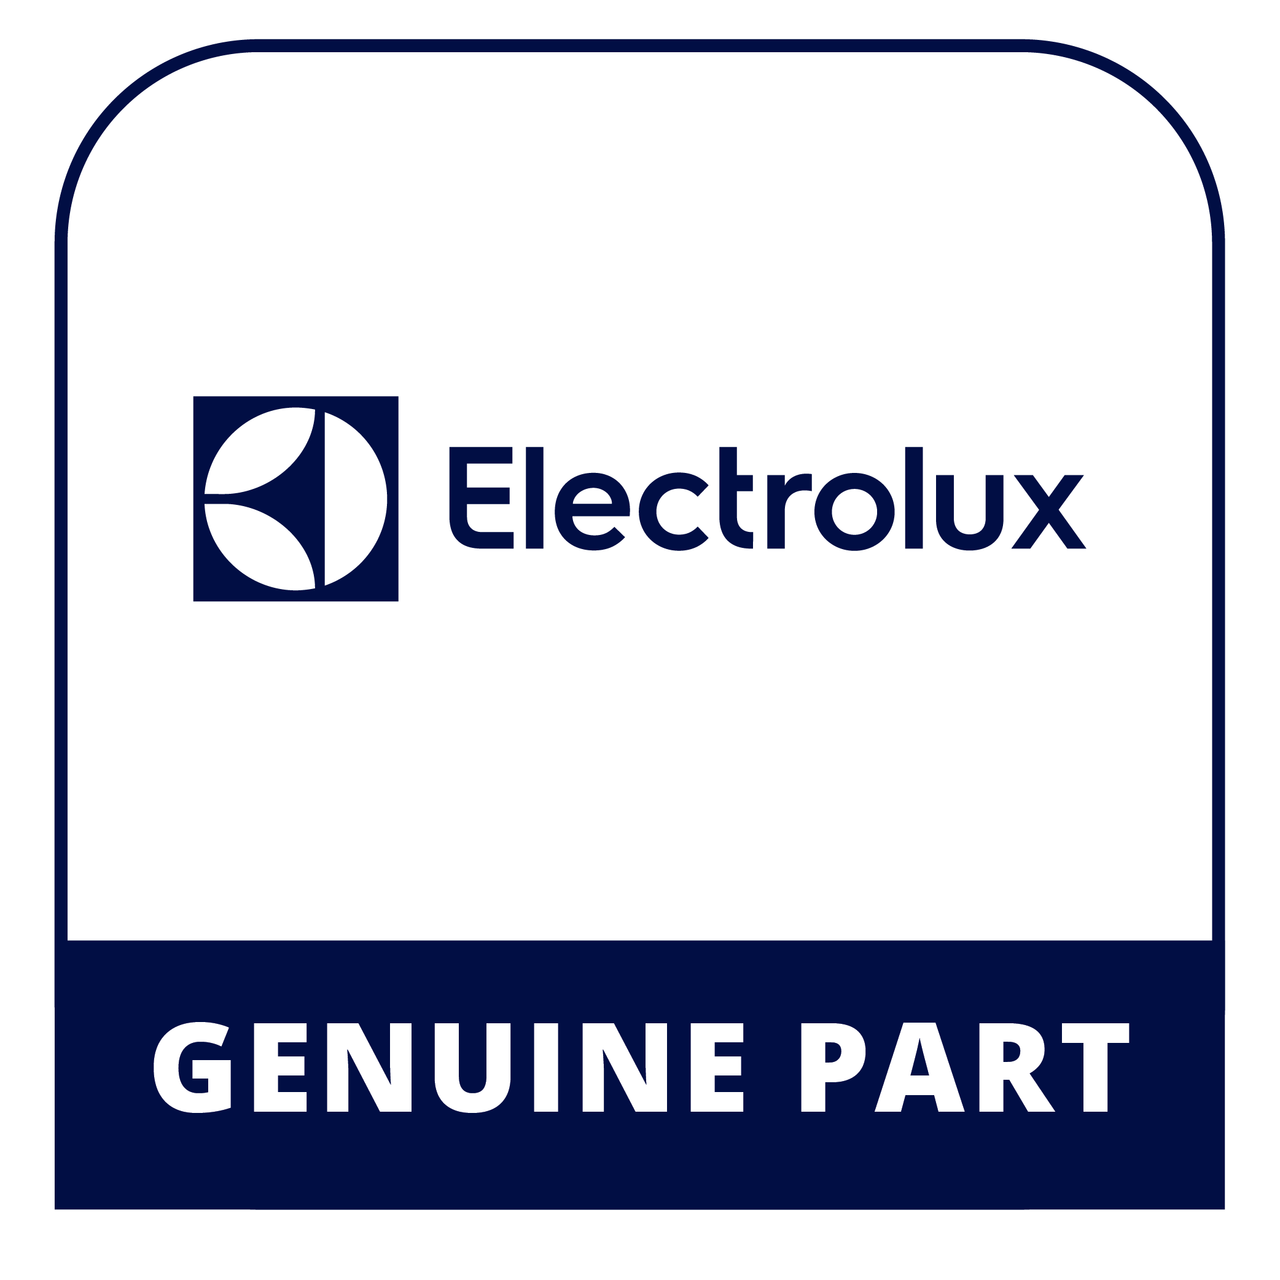 Frigidaire - Electrolux 240316106 Defrost Heater - Genuine Electrolux Part